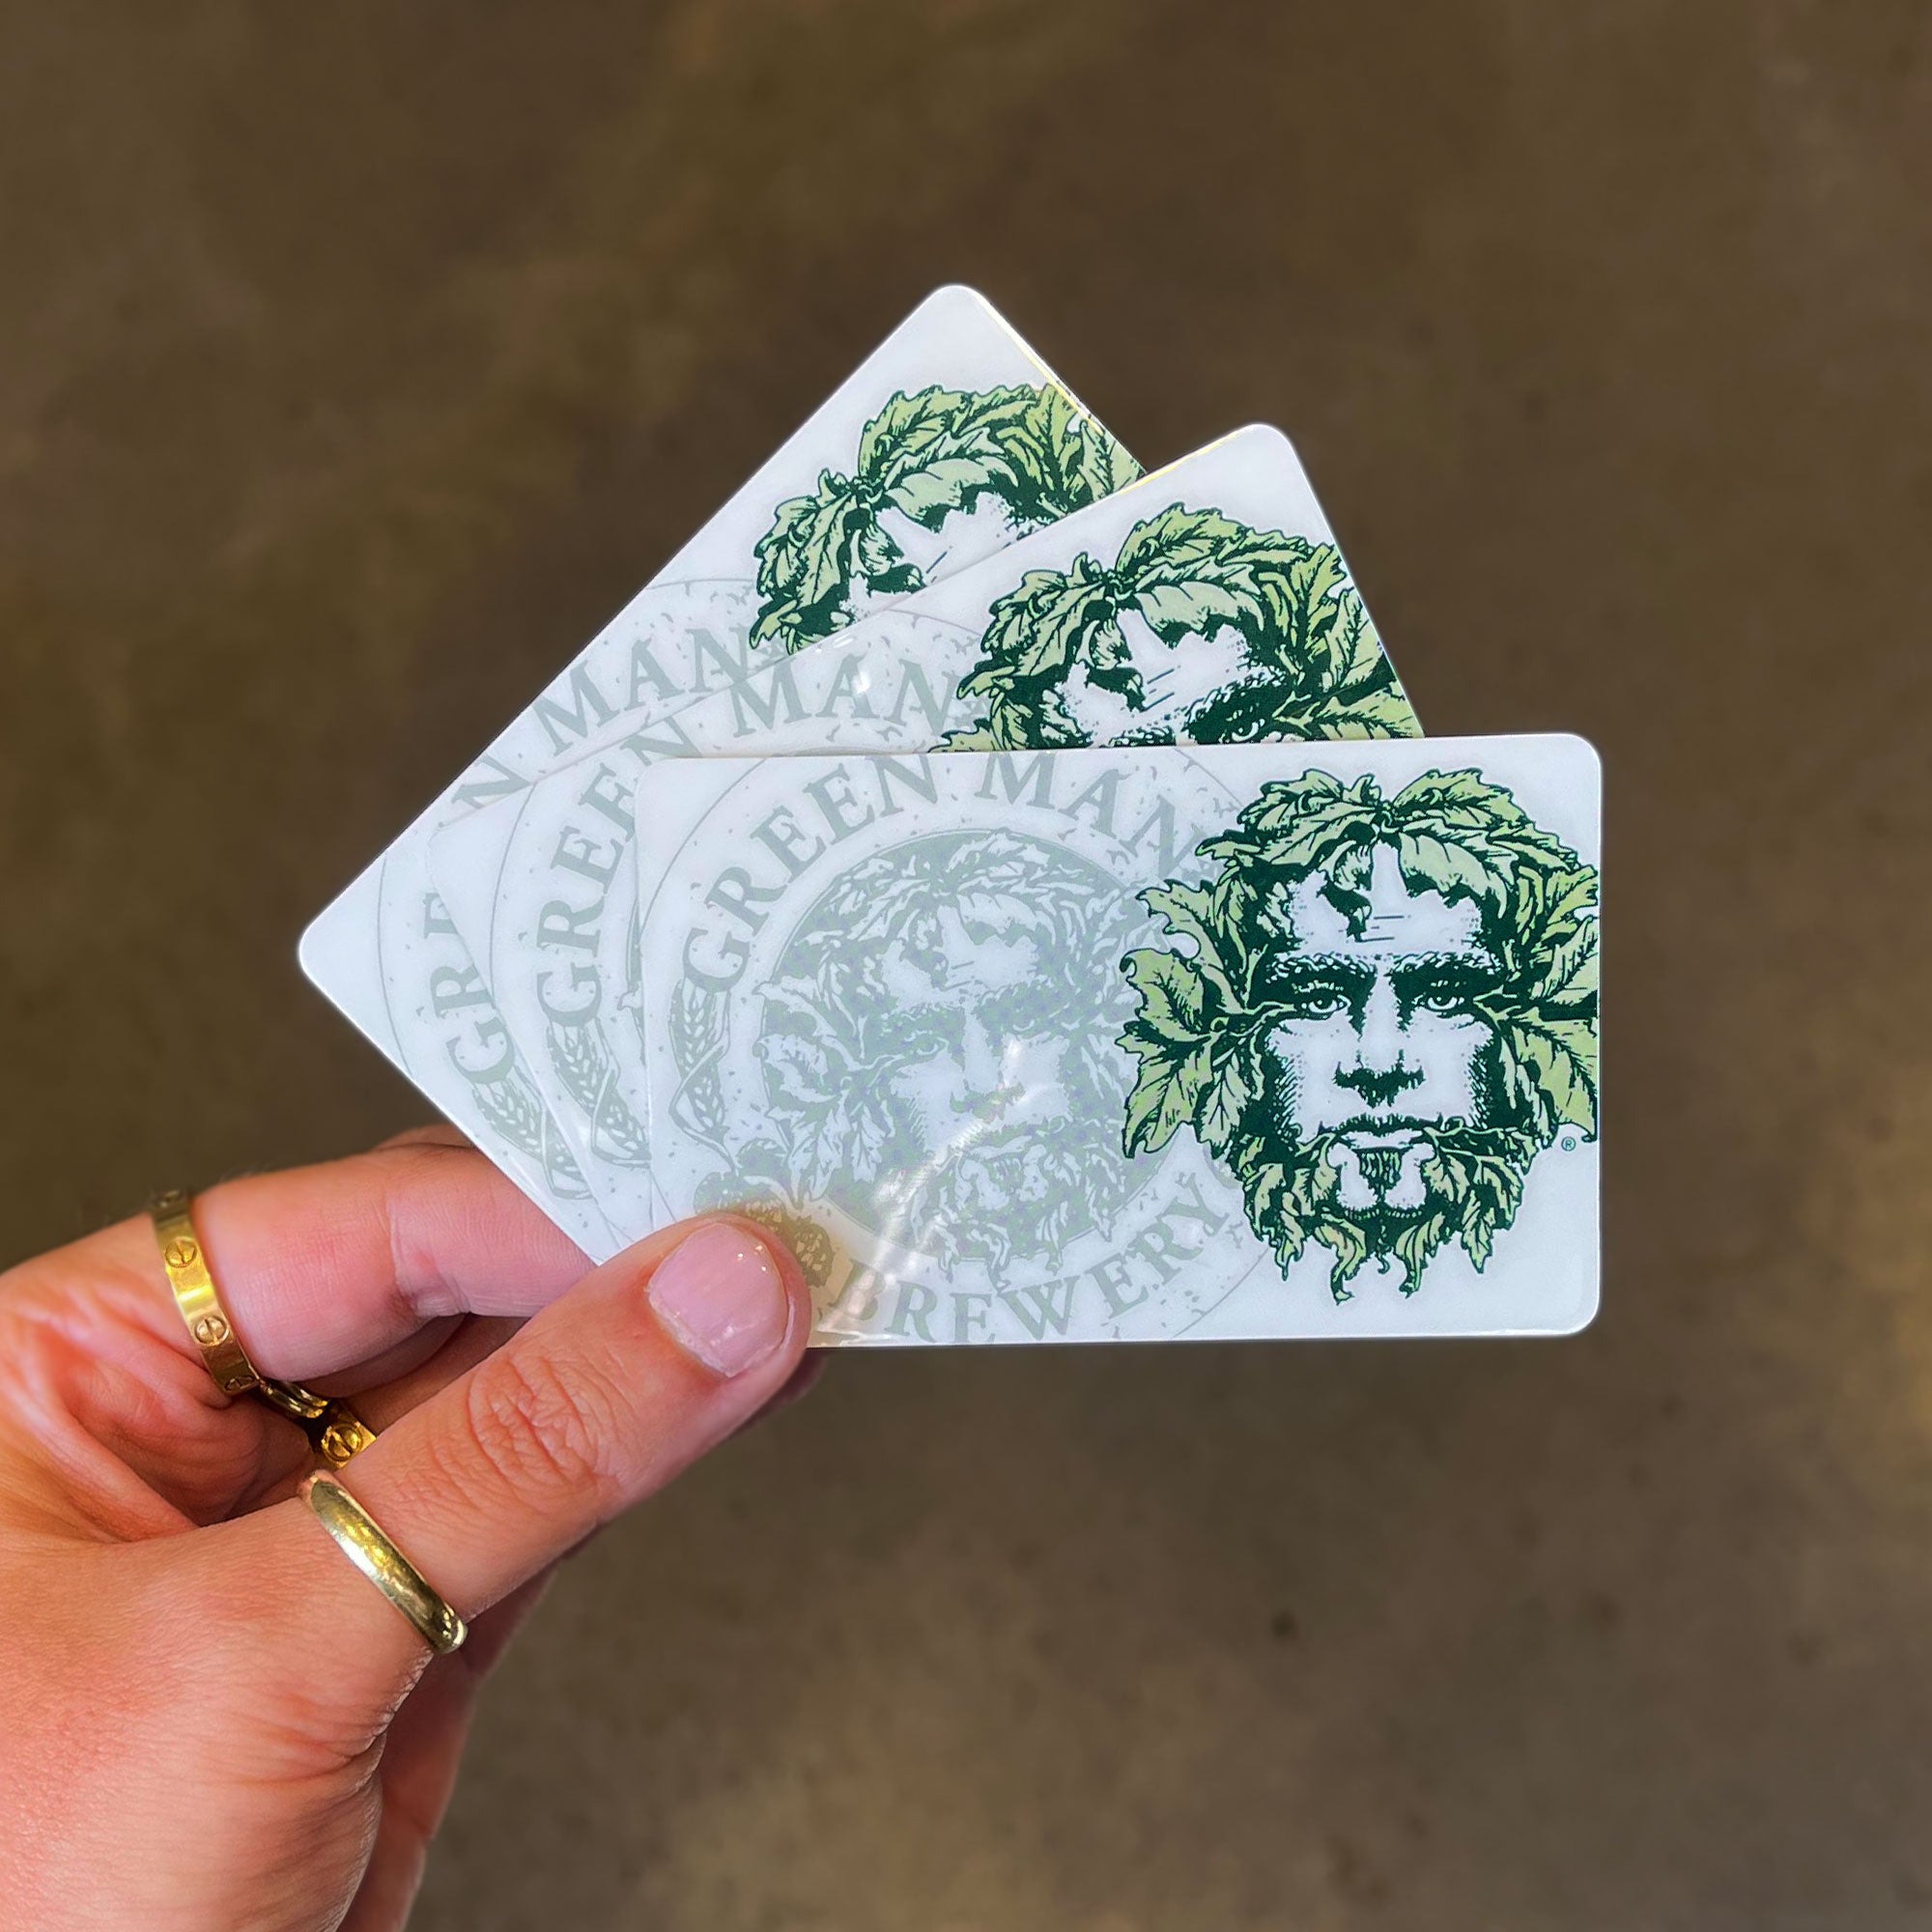 Green Man Gaming Introduces Gift Cards - Green Man Gaming Blog